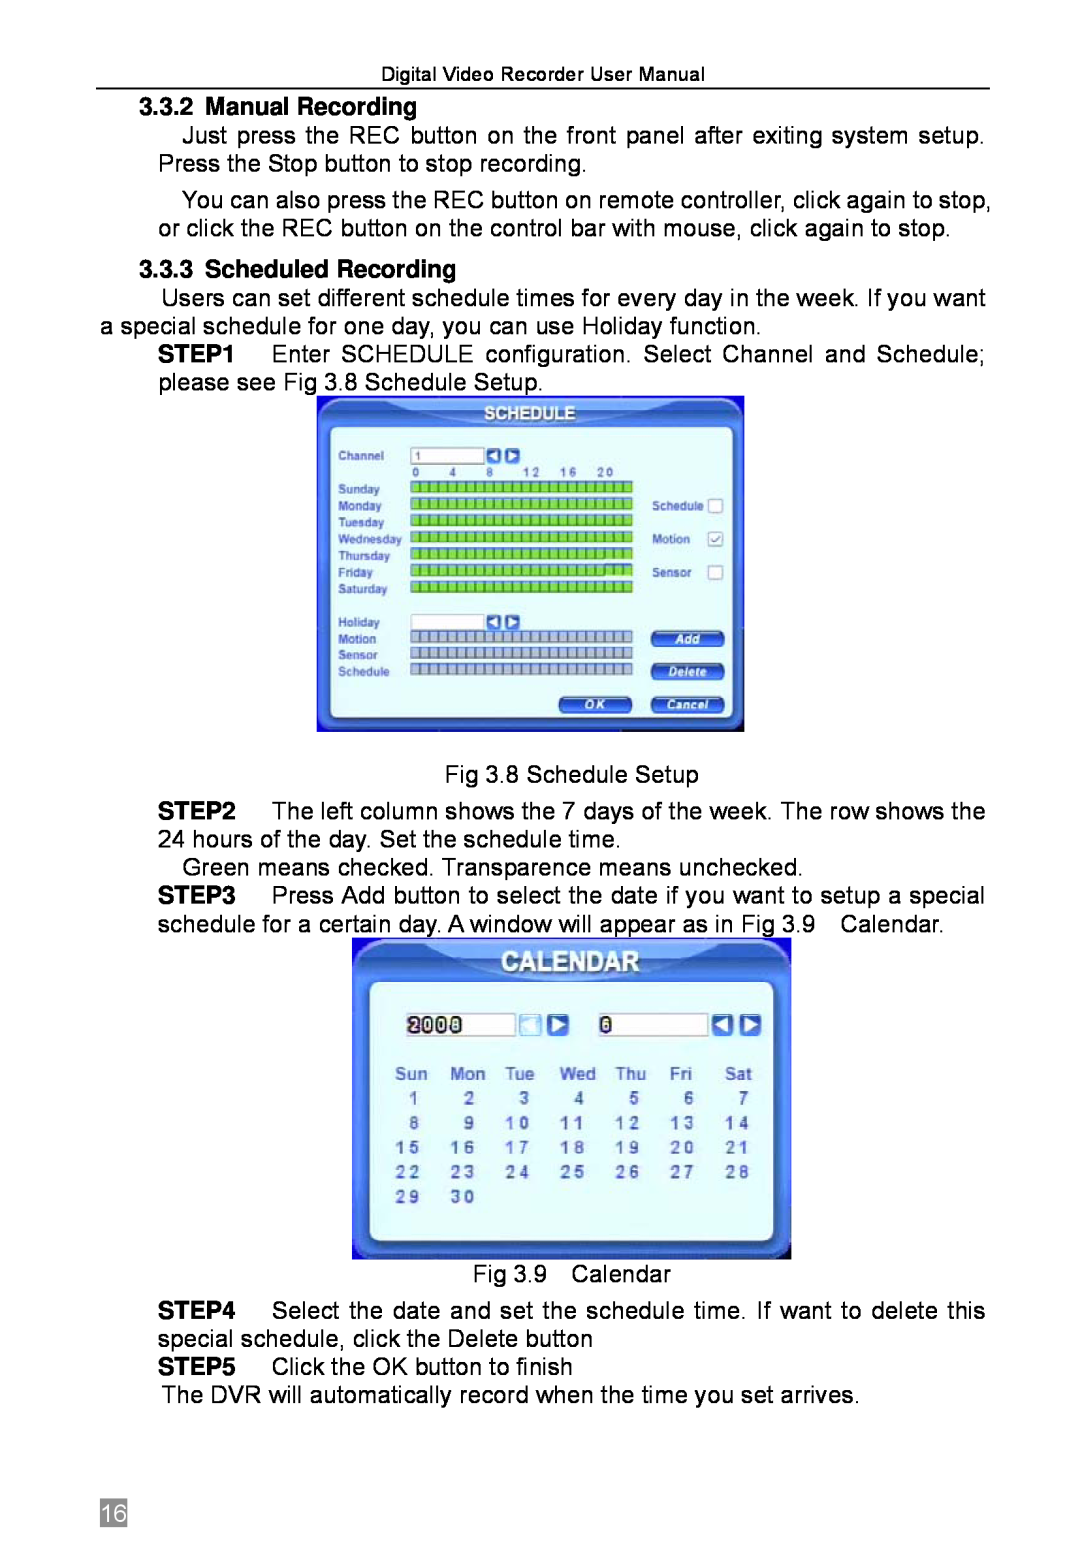 Q-See QSTD2404, QSTD2416, QSTD2408 user manual Manual Recording, Scheduled Recording 